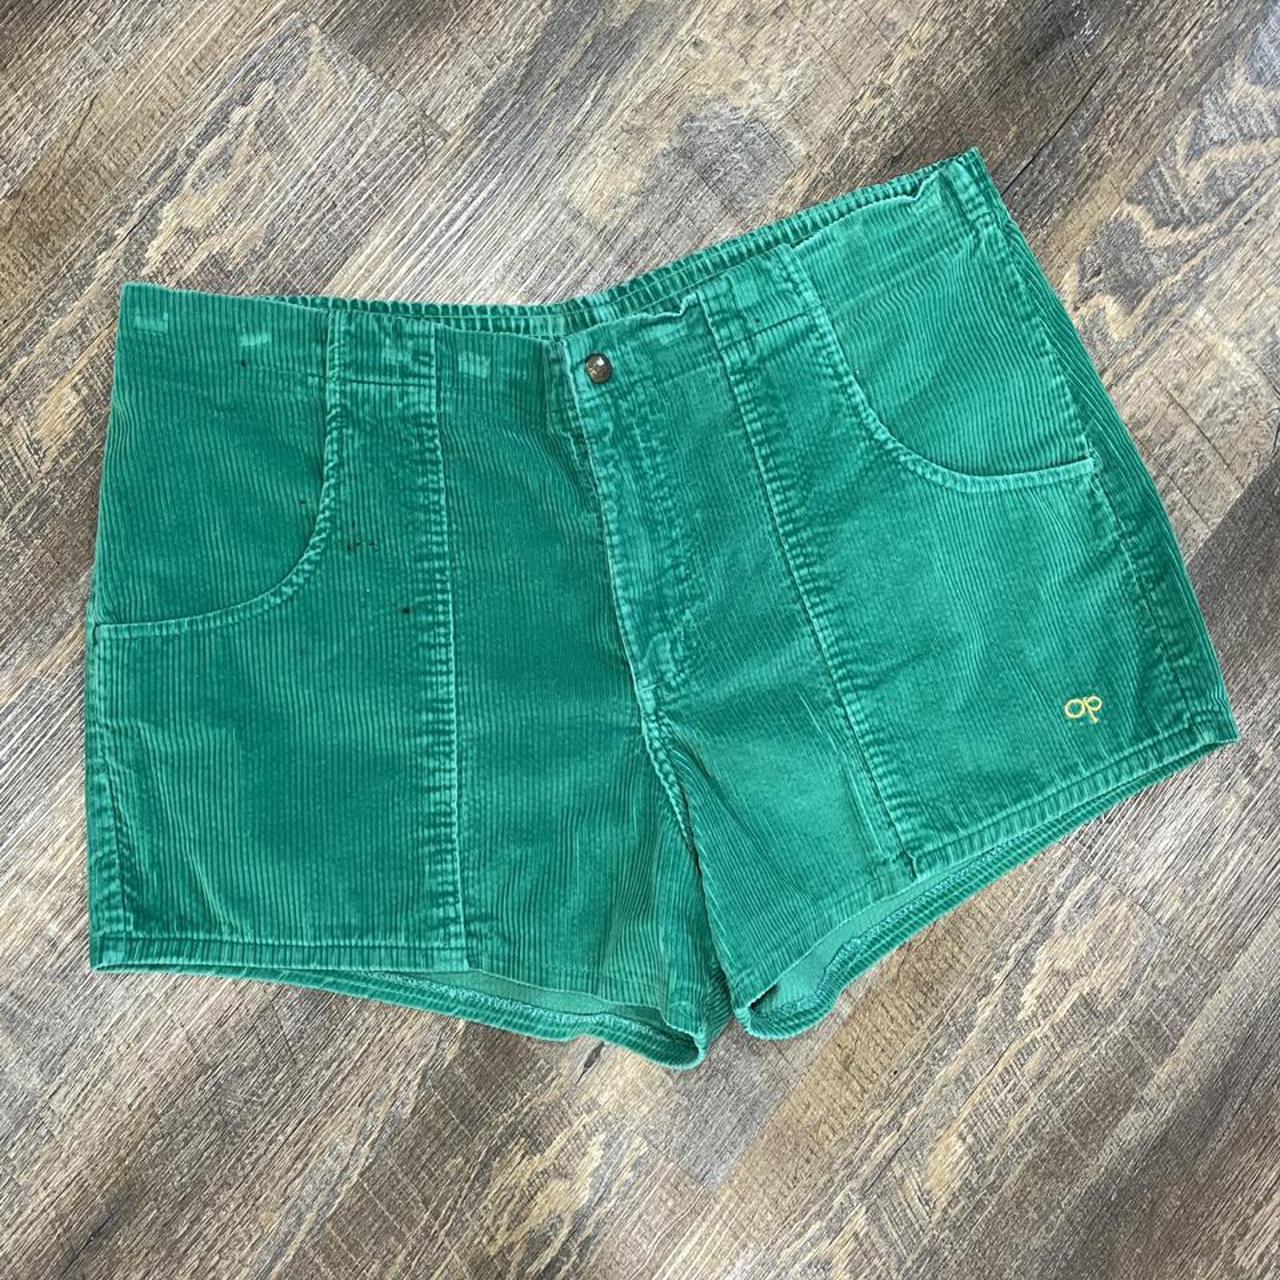 Product Image 2 - Vintage Ocean Pacific Corduroy Shorts